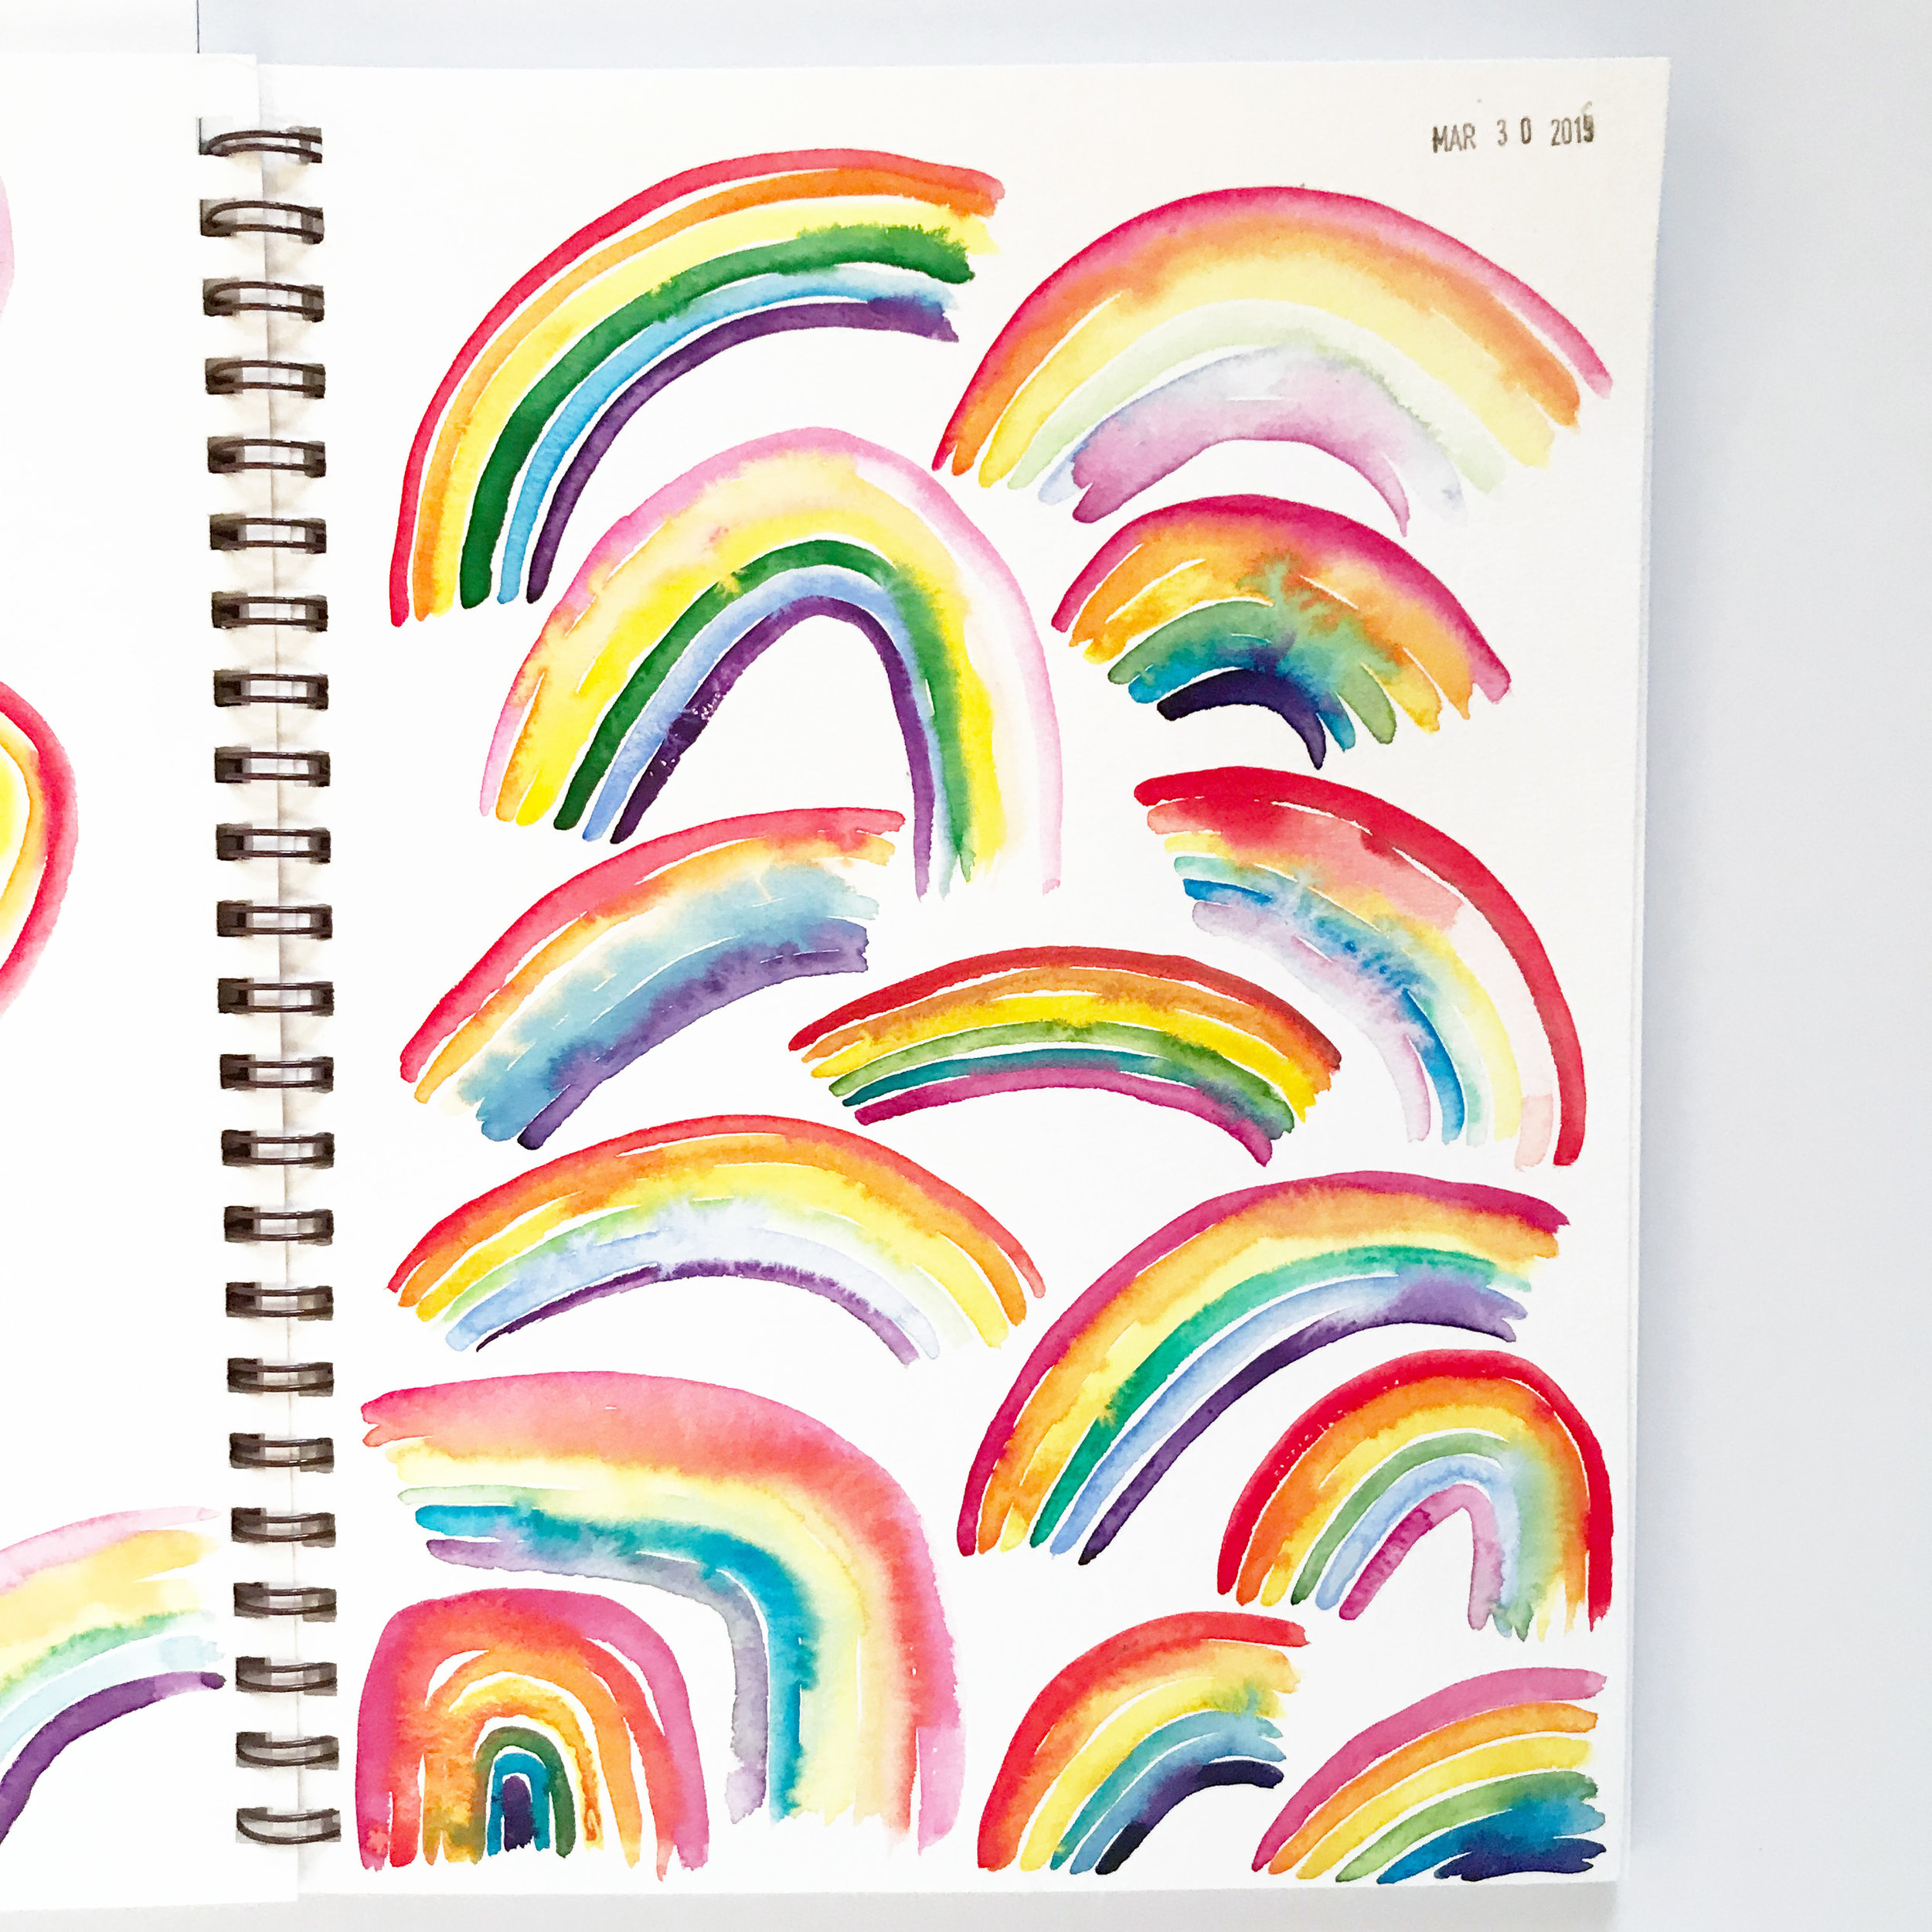 Watercolor Rainbows in Anne Butera's Sketchbook